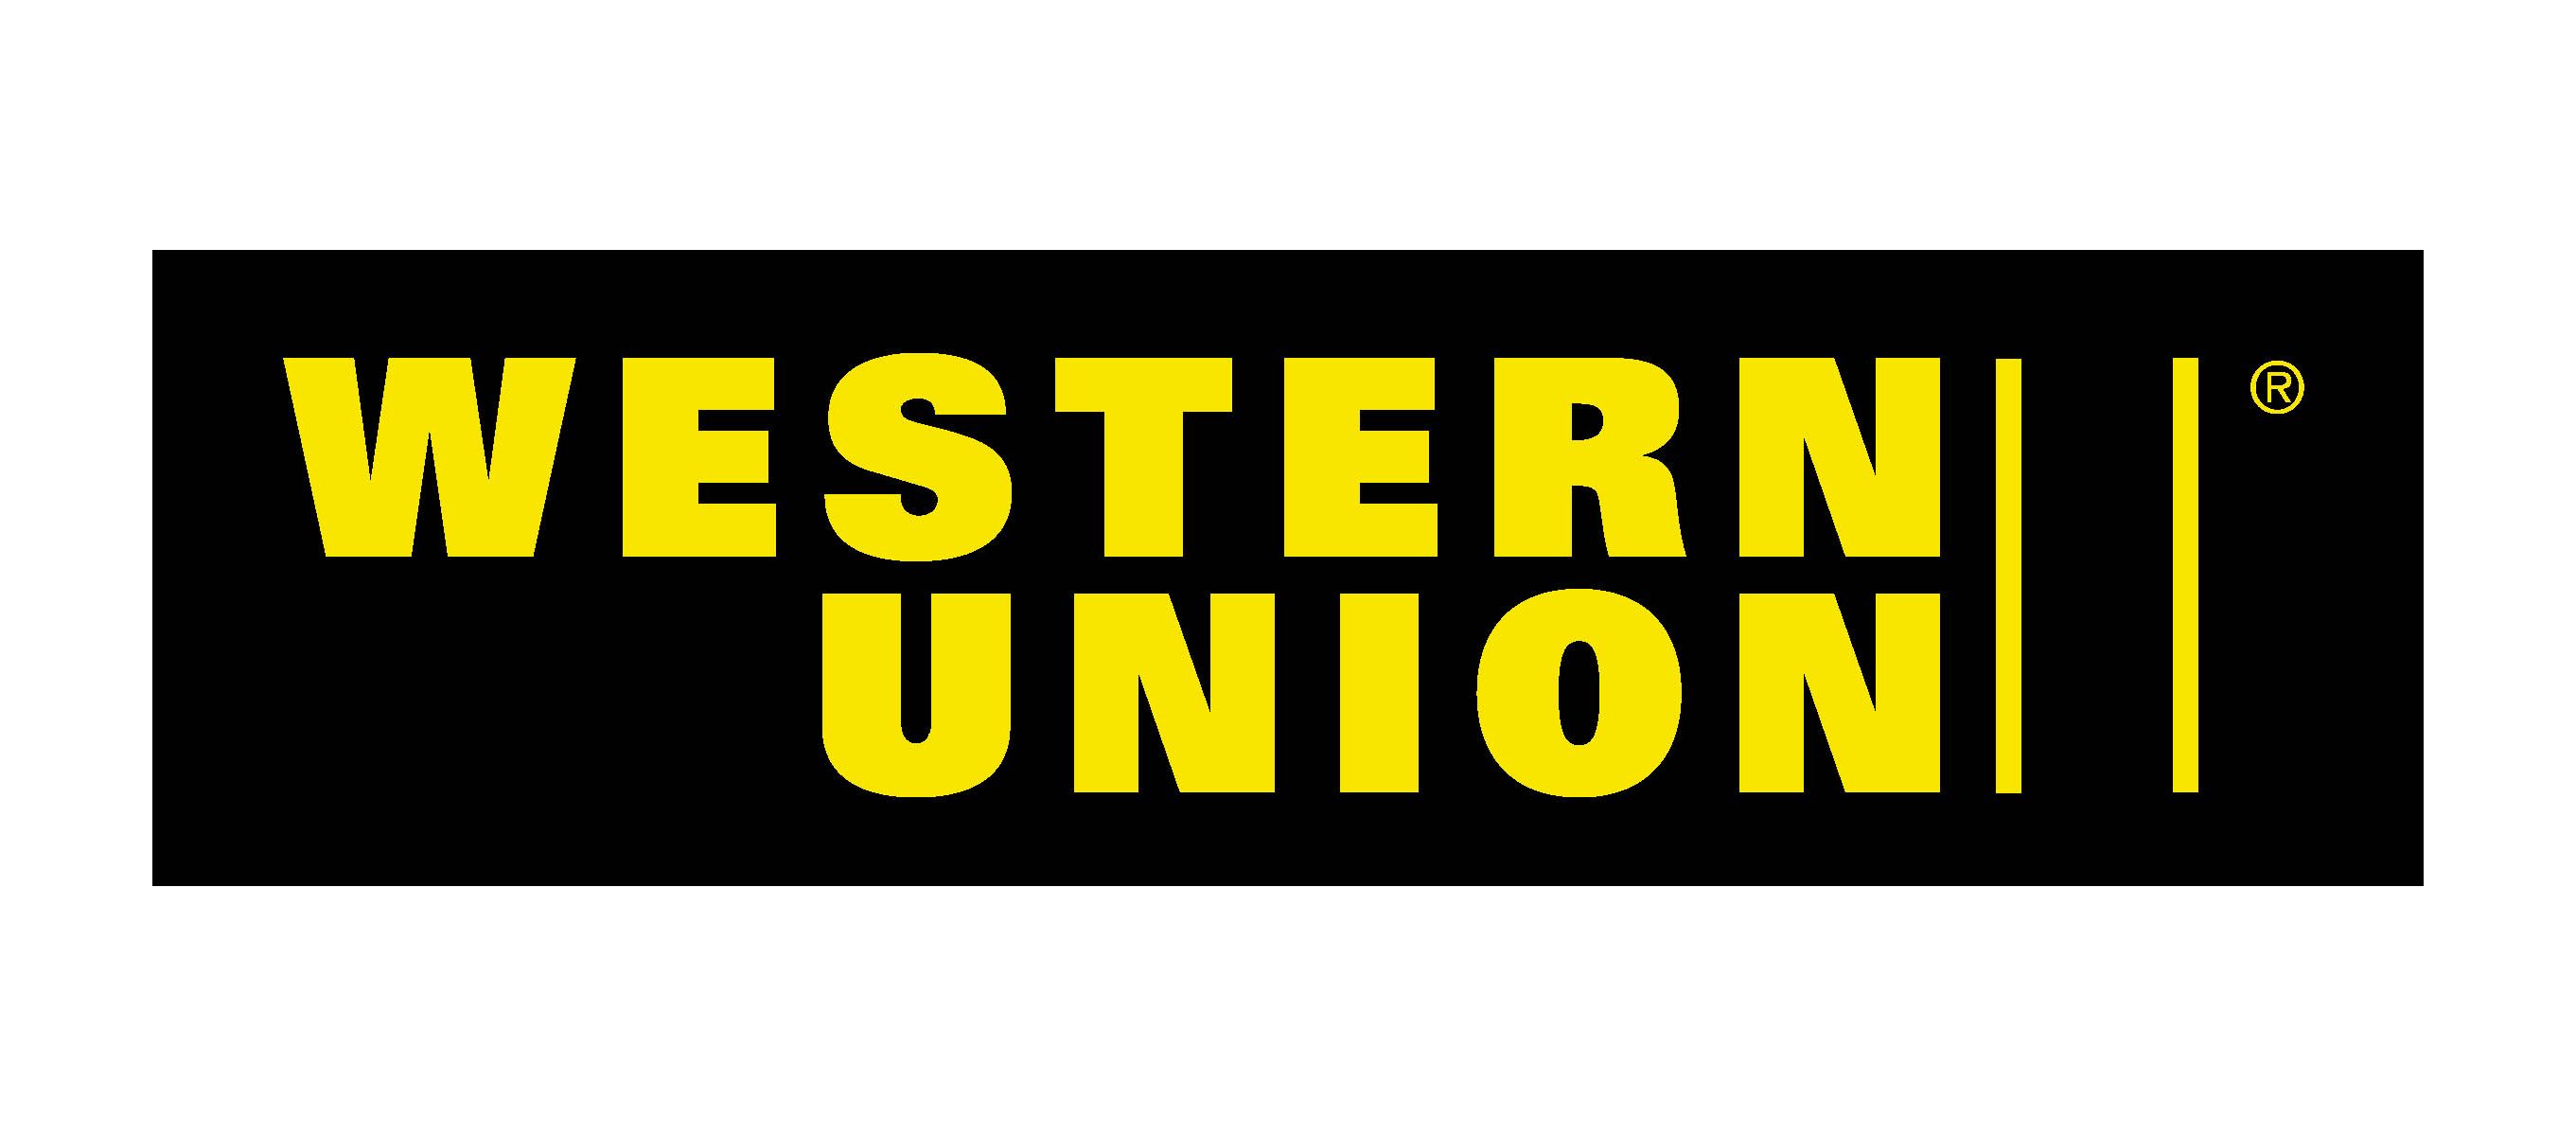 Ovnicom western union